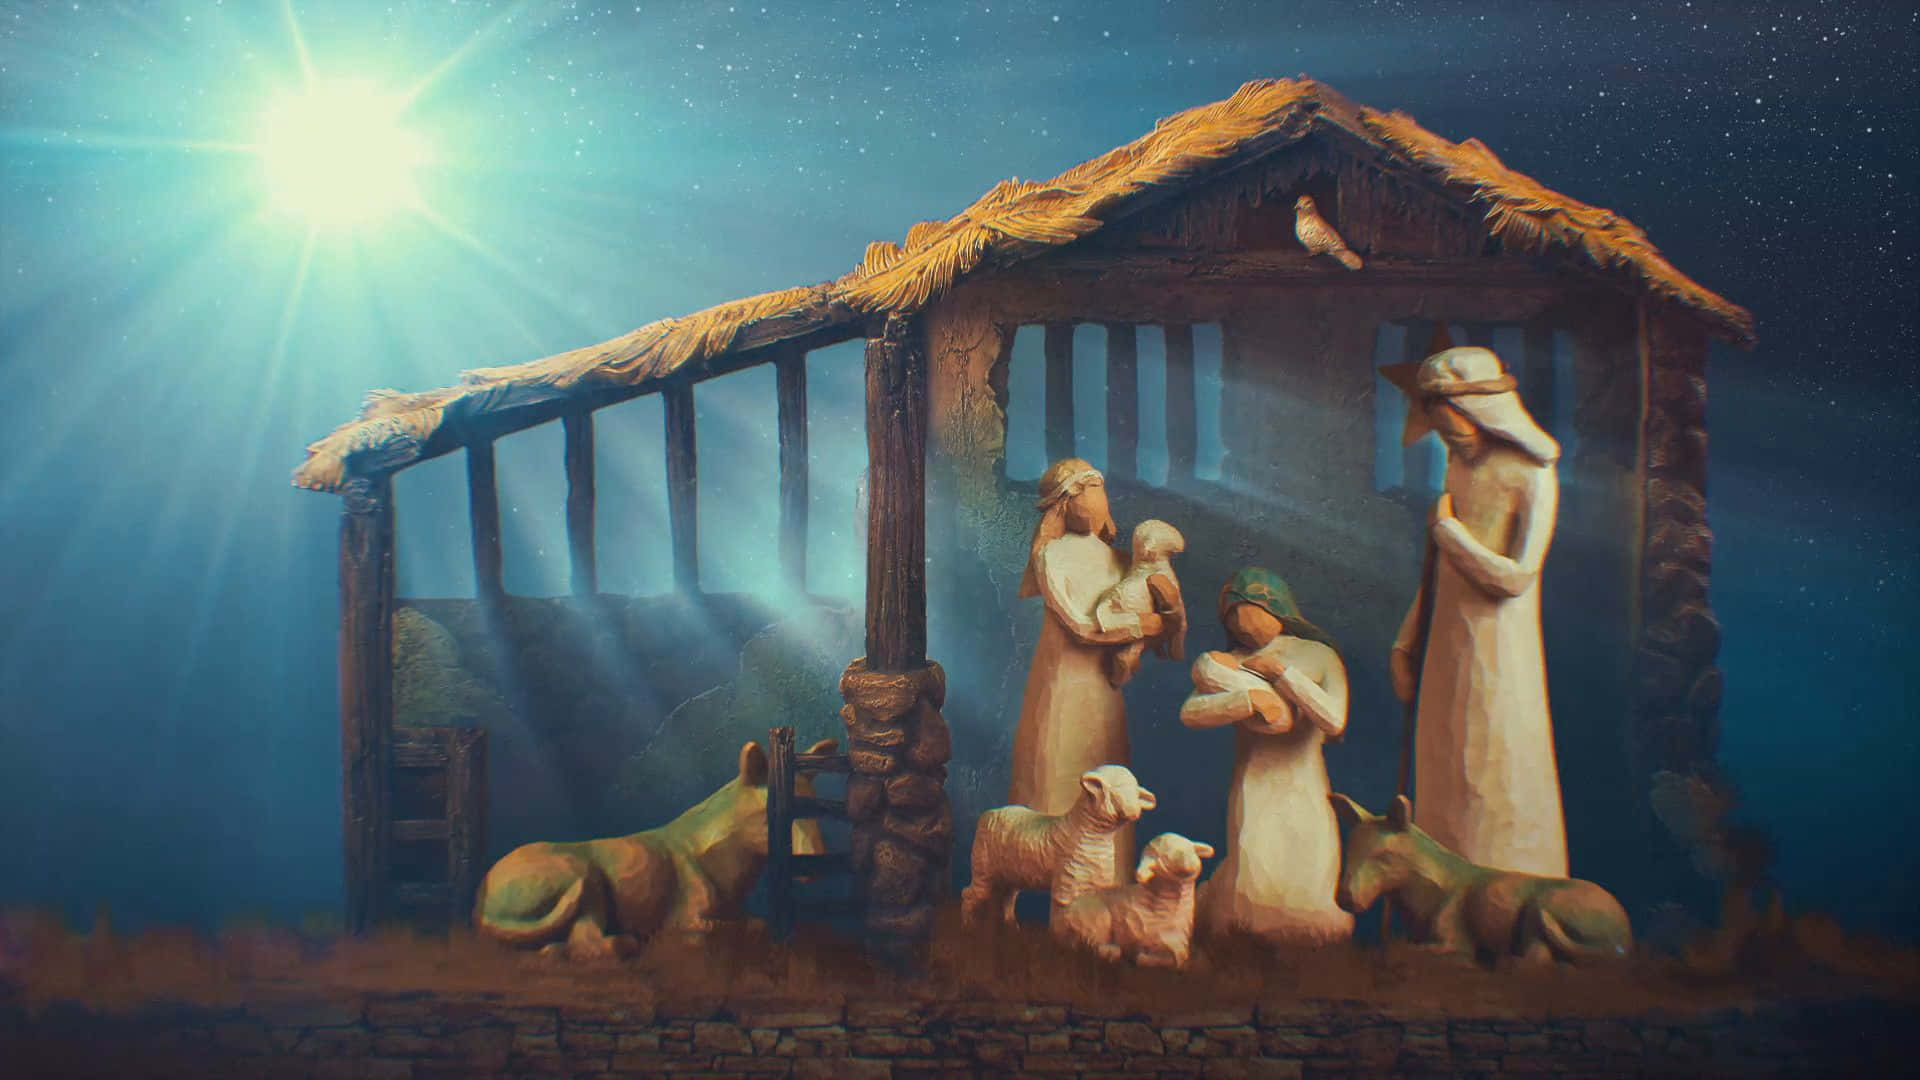 "A Nativity Scene Christmas"